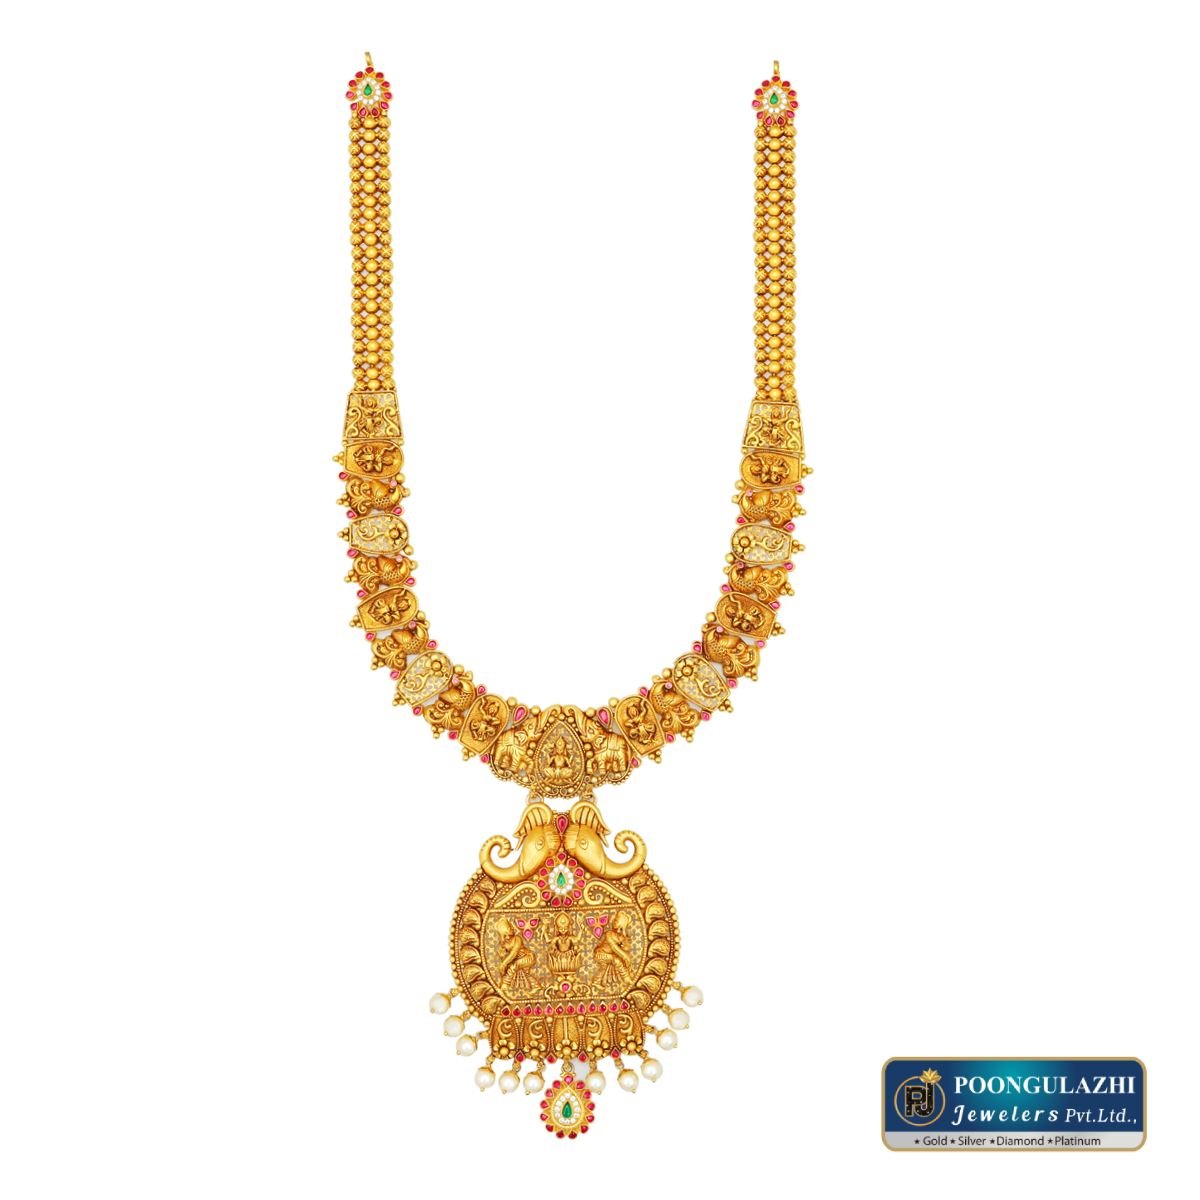 Black Gold Necklace in Madurai